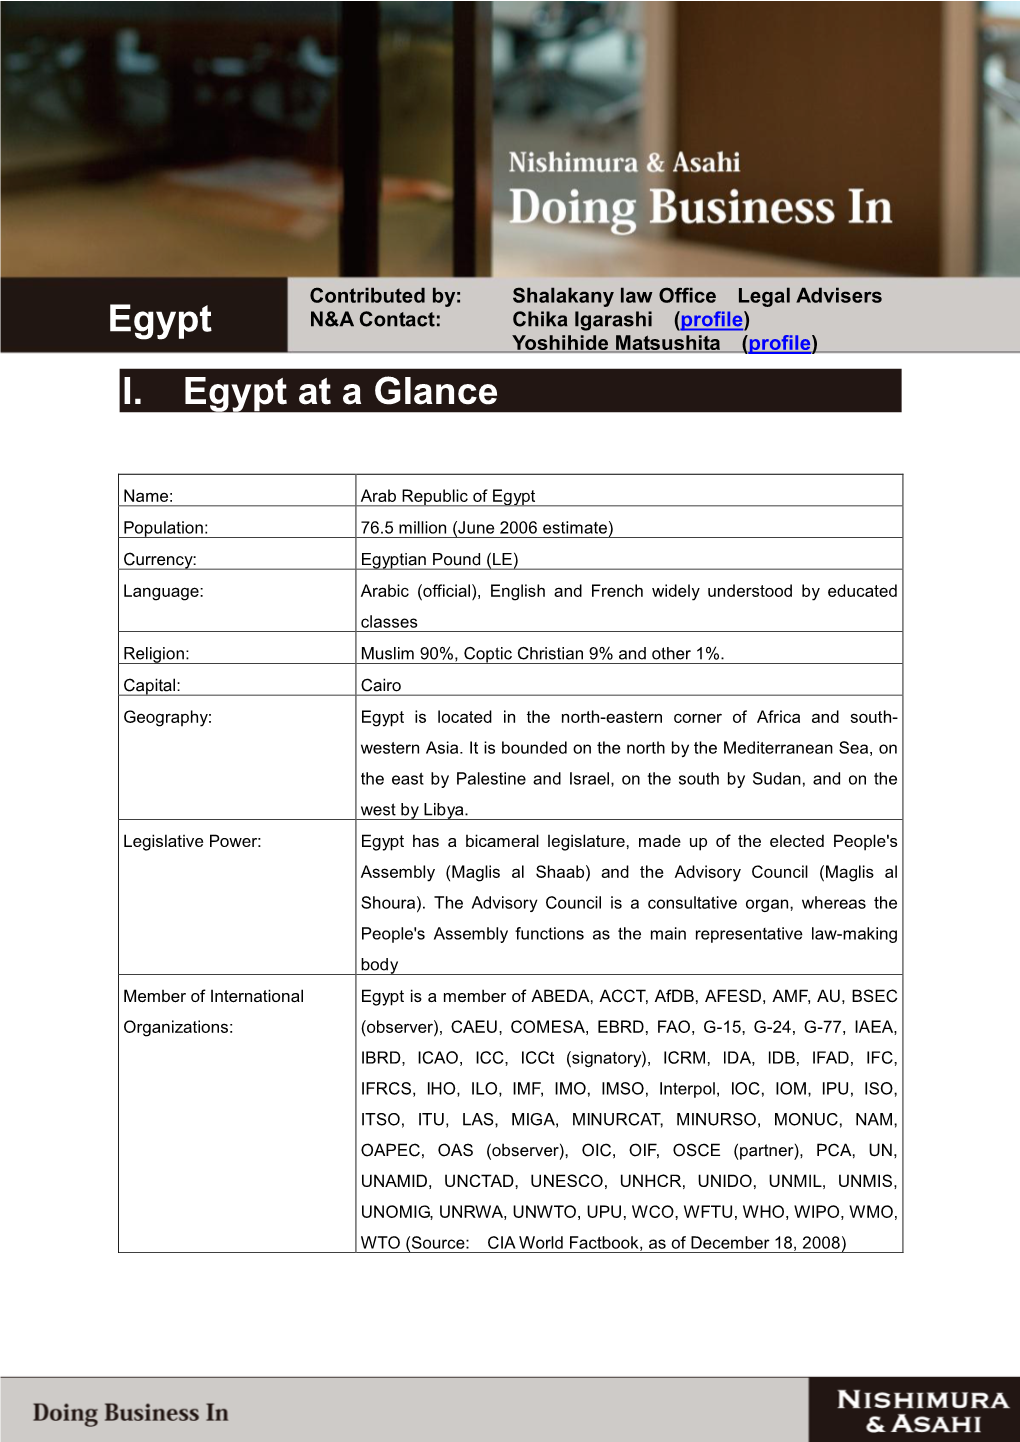 Doing Business in Egypt